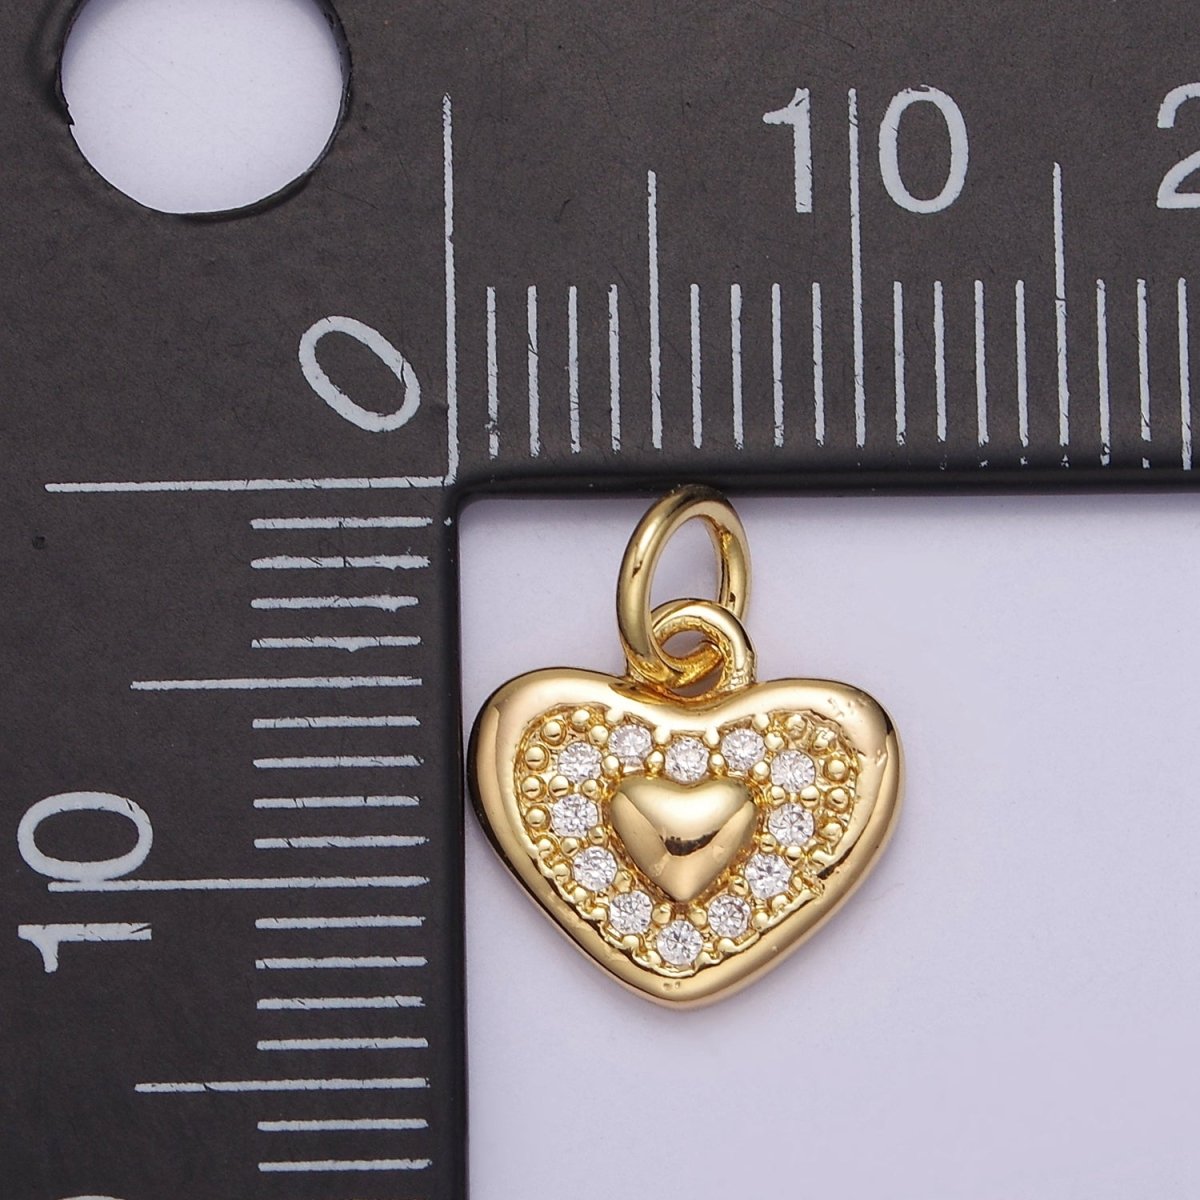 18K Gold Filled Small Heart Charm Pendant CZ Micro Pave, Heart Charm, Heart Pendant, Heart Necklace, Cubic Zirconia E-710 - DLUXCA